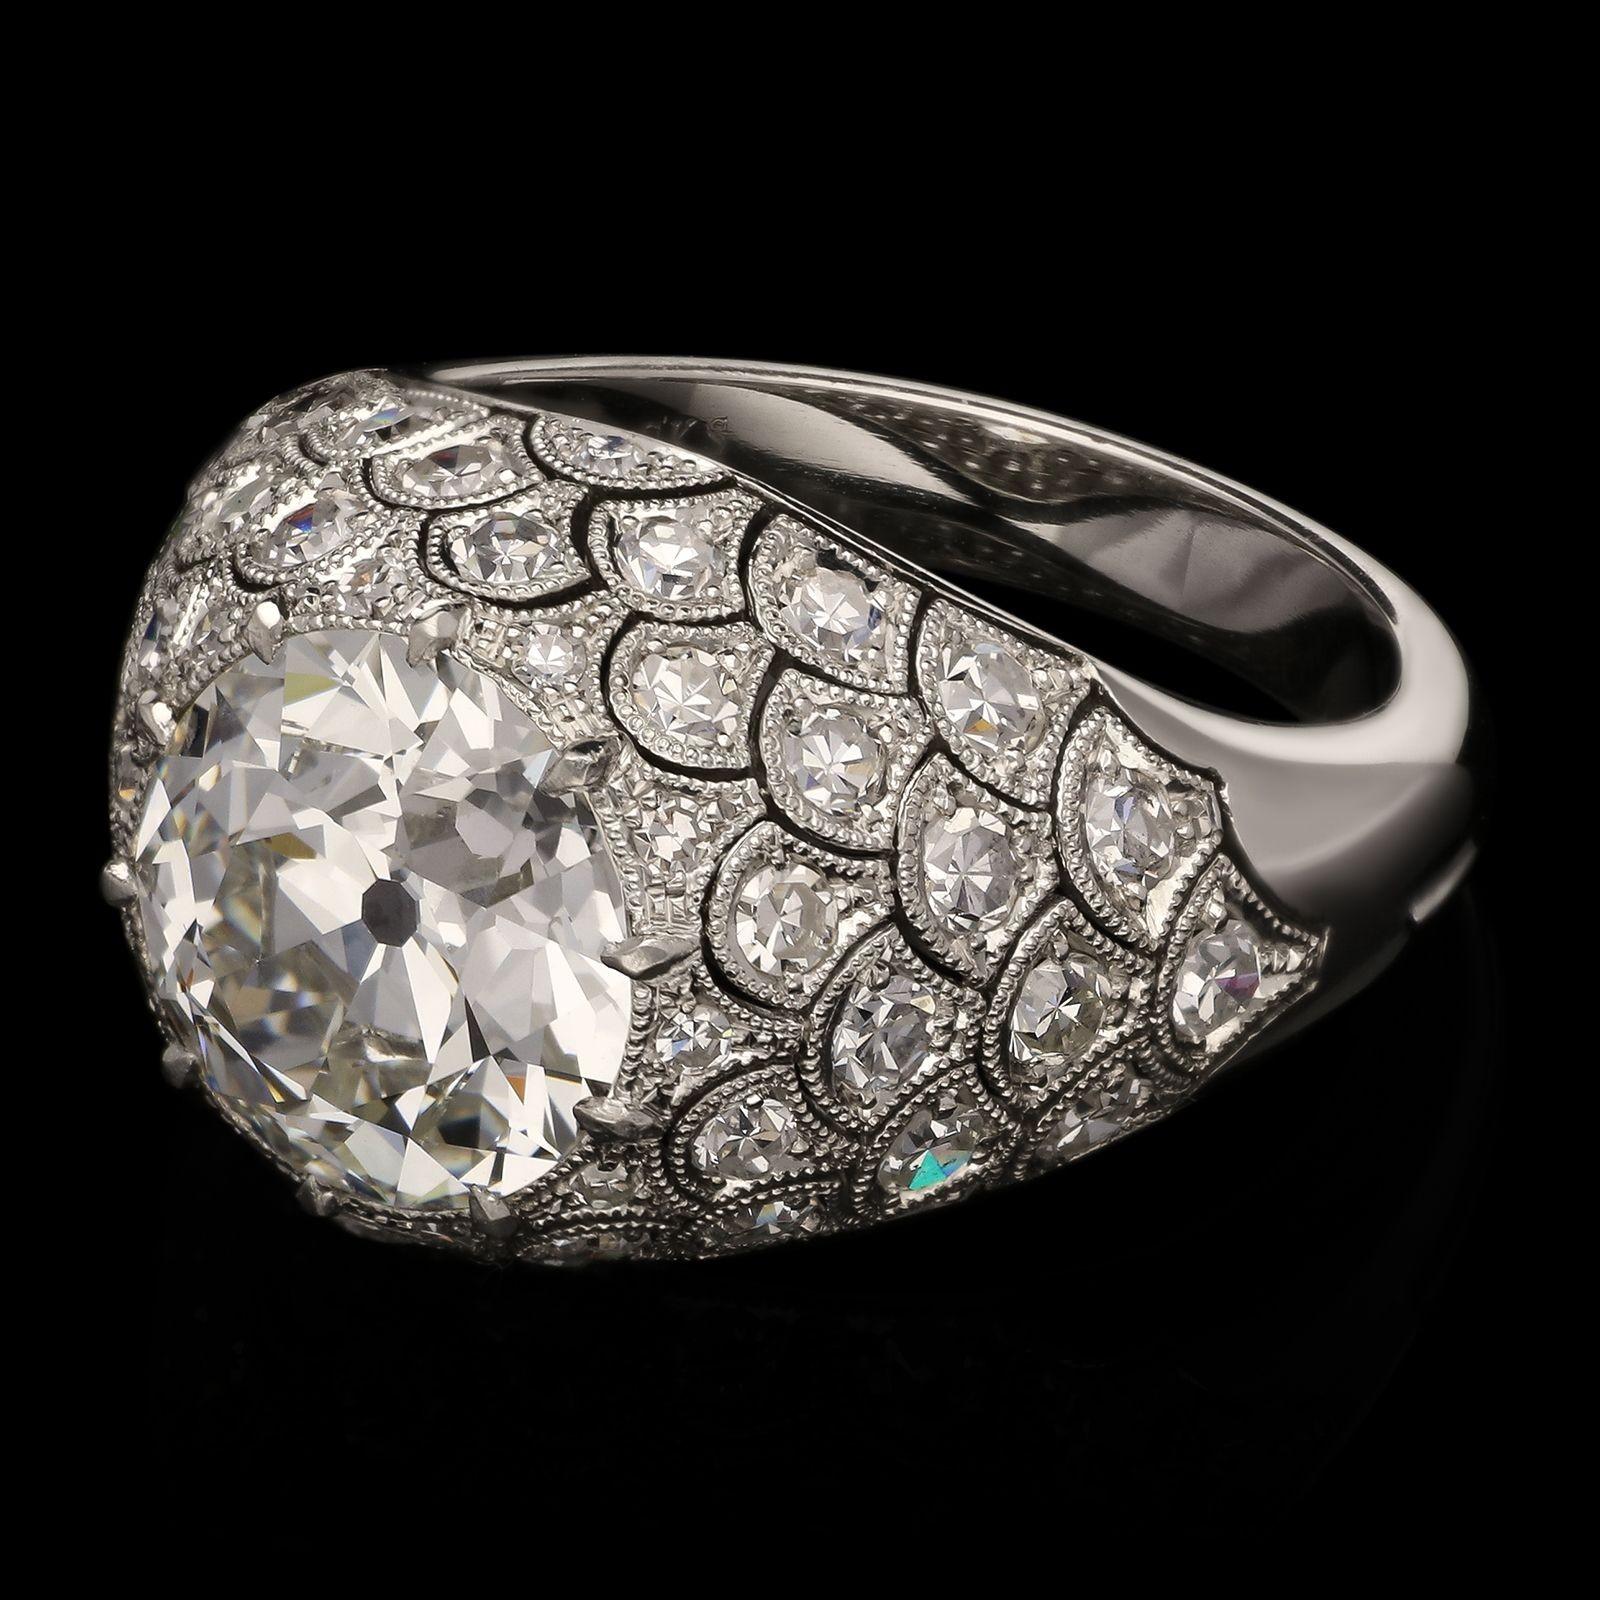 Brilliant Cut Hancocks 3.12 Carat Old European Brilliant Diamond Ring in Diamond Bombe Mount For Sale